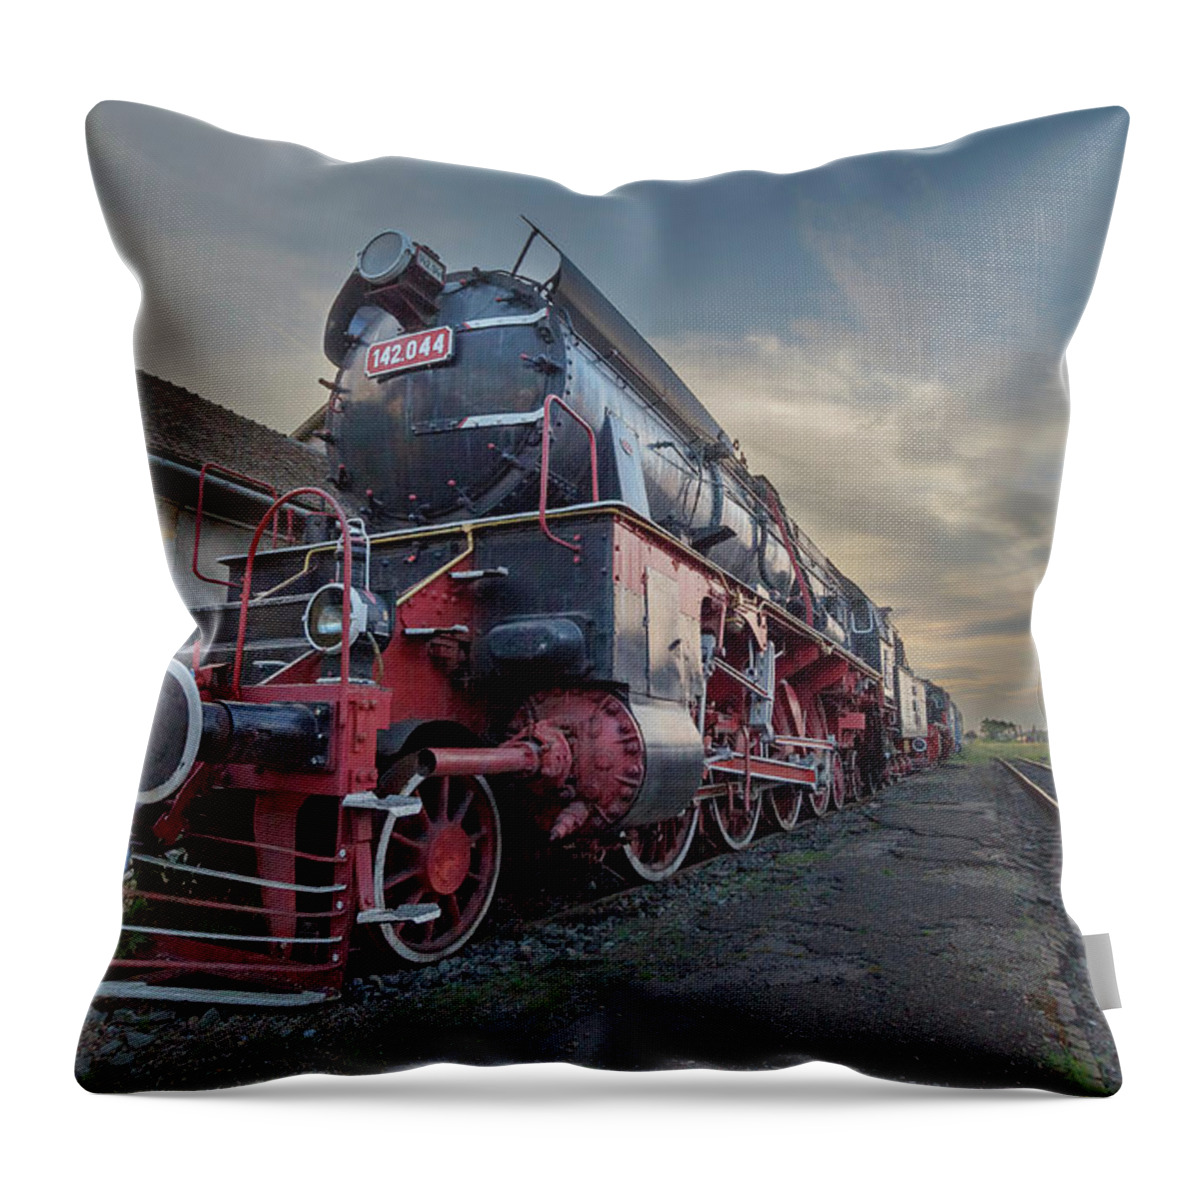 Romania Throw Pillow featuring the photograph No More Steam by Rick Deacon